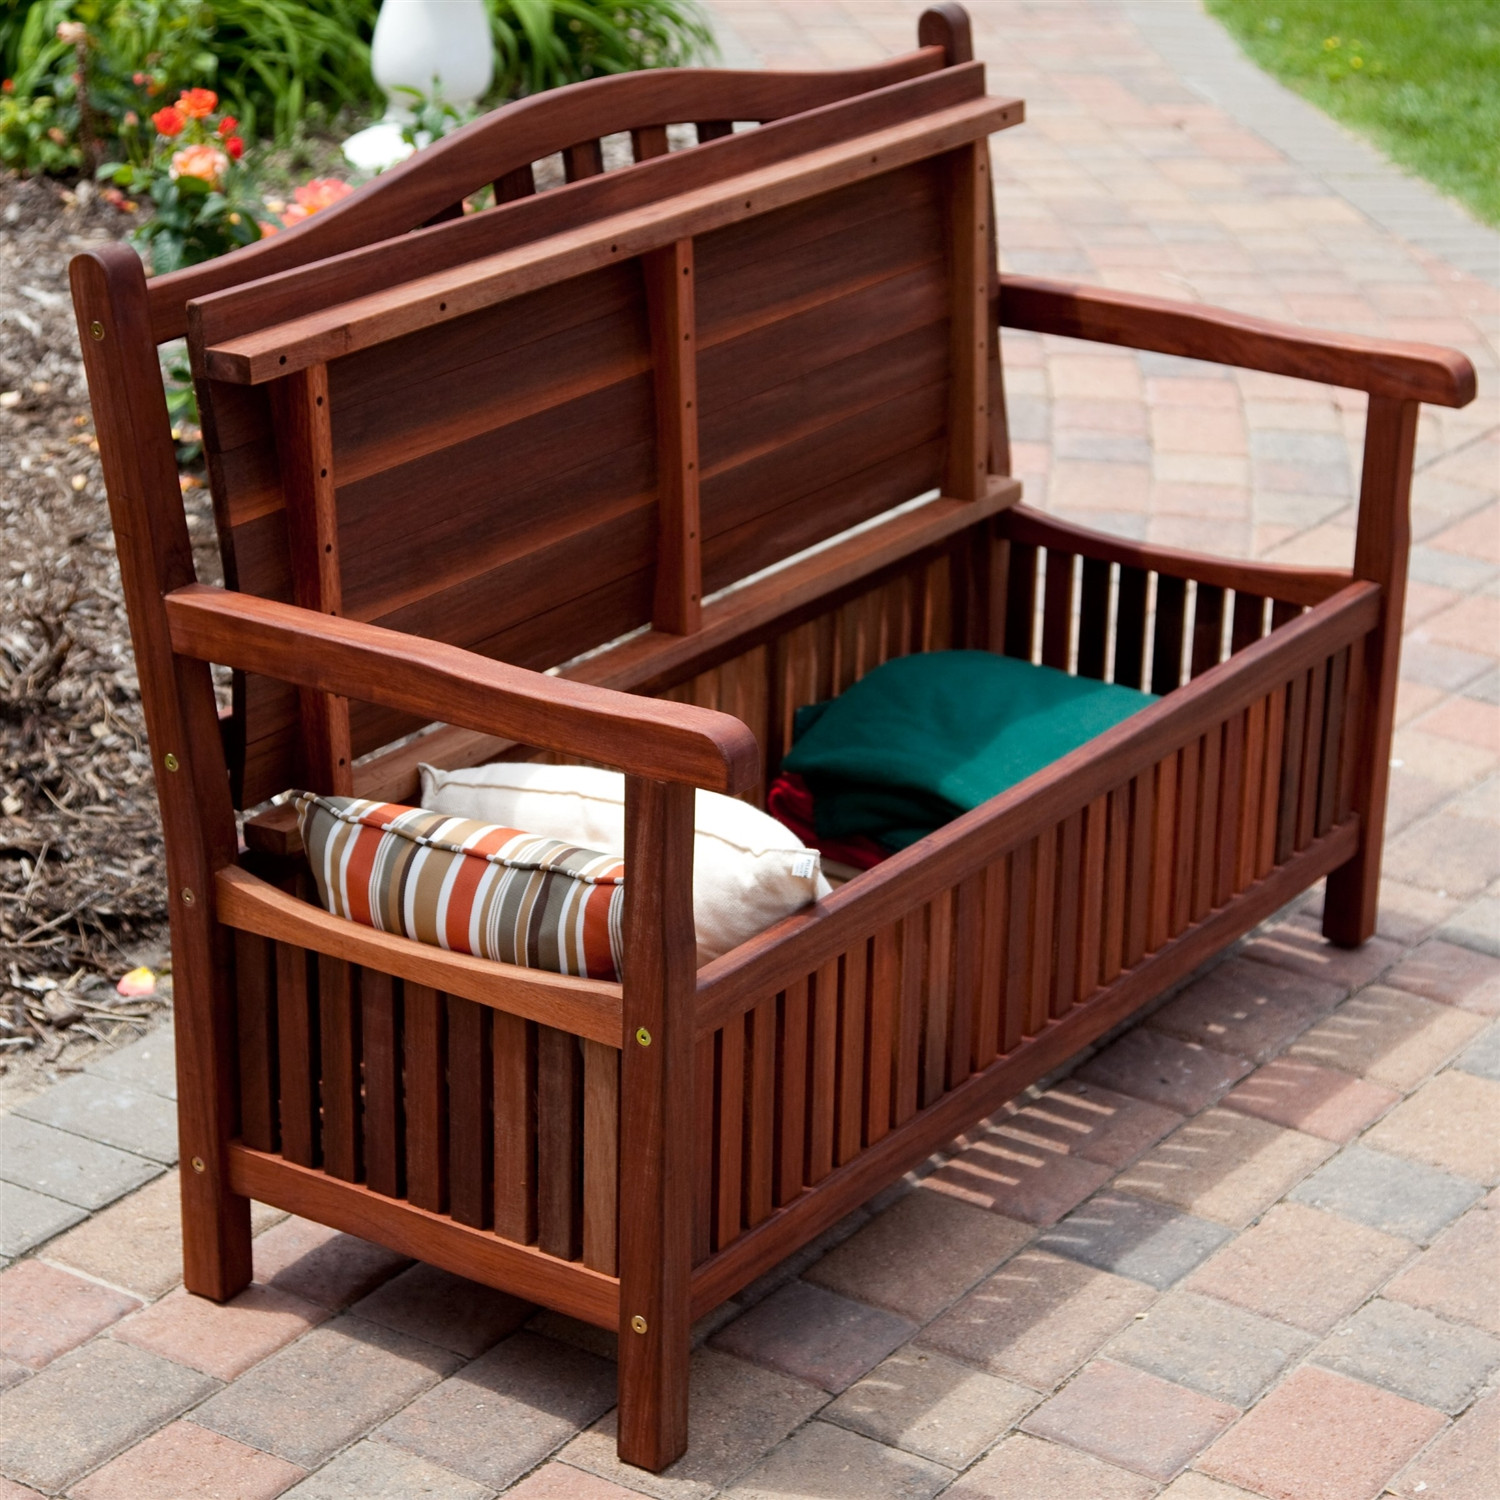 Wooden Outdoor Storage Bench
 Outdoor Wooden Storage Bench for Patio Garden Backyard